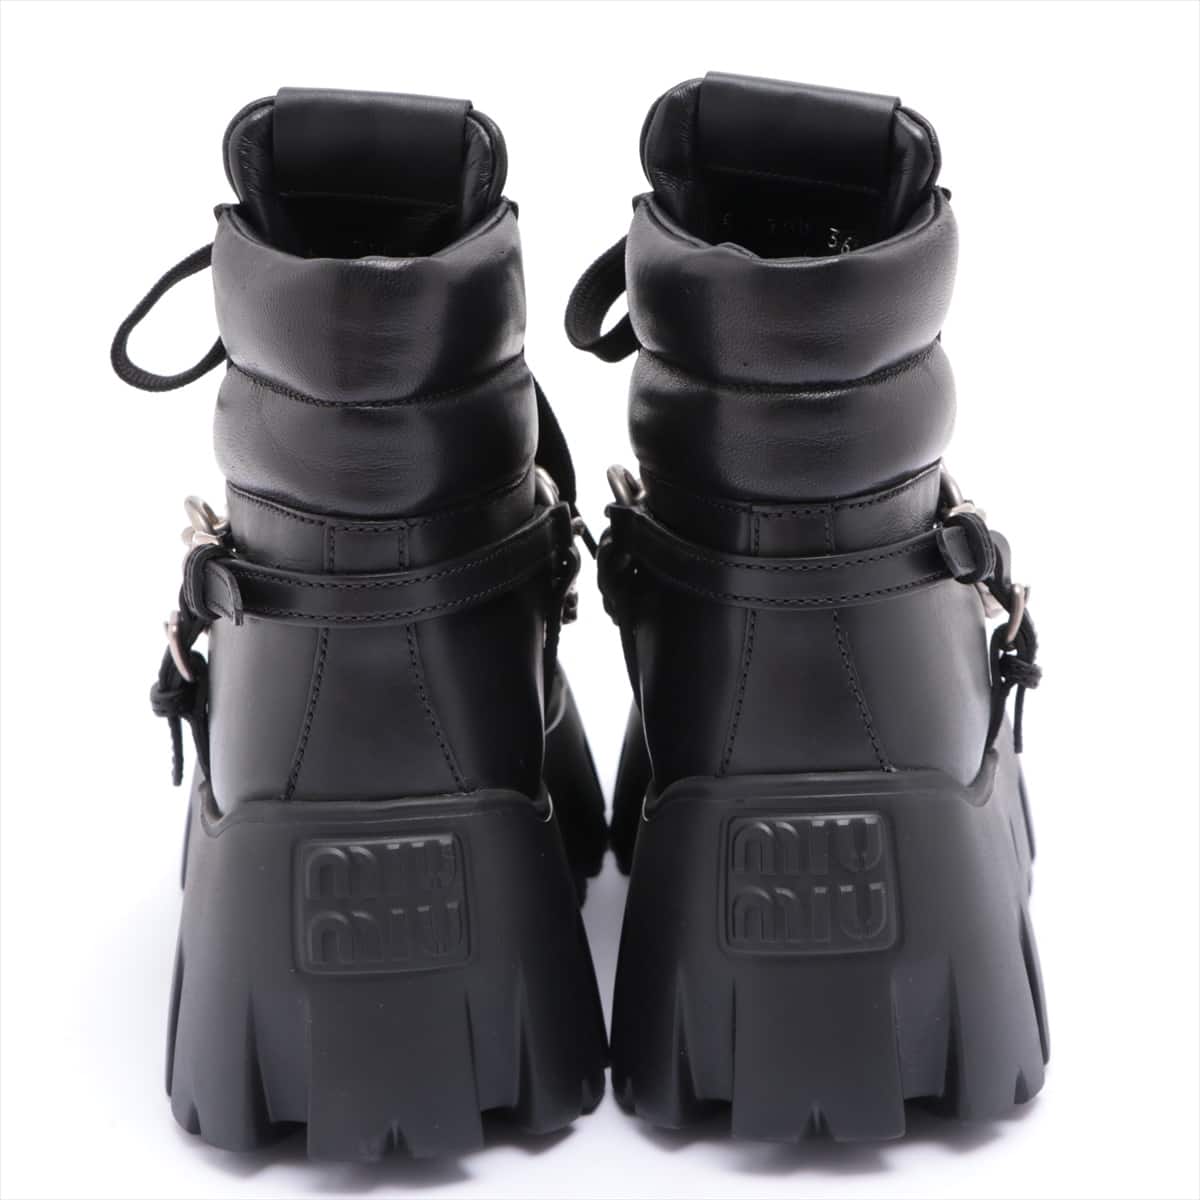 Miu Miu Leather Short Boots 36 Ladies' Black 5T570D